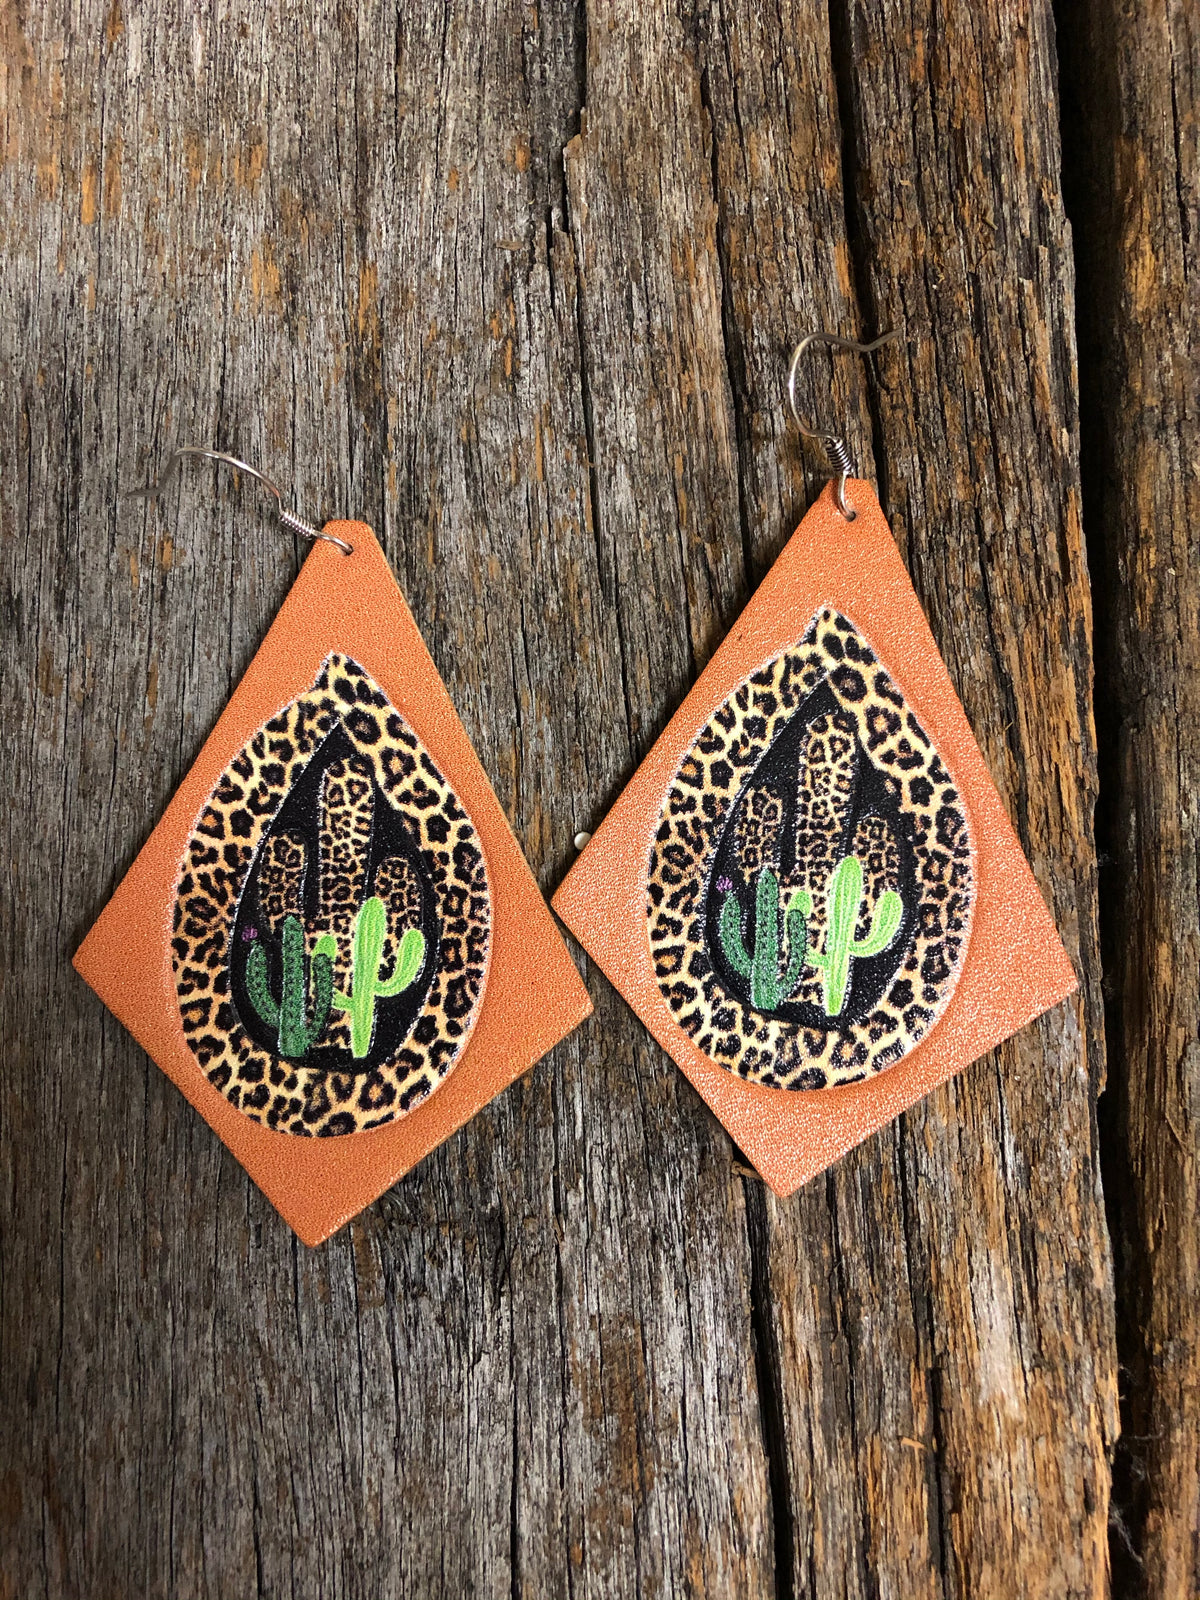 Western Earrings - Black Cactus and Leopard Print